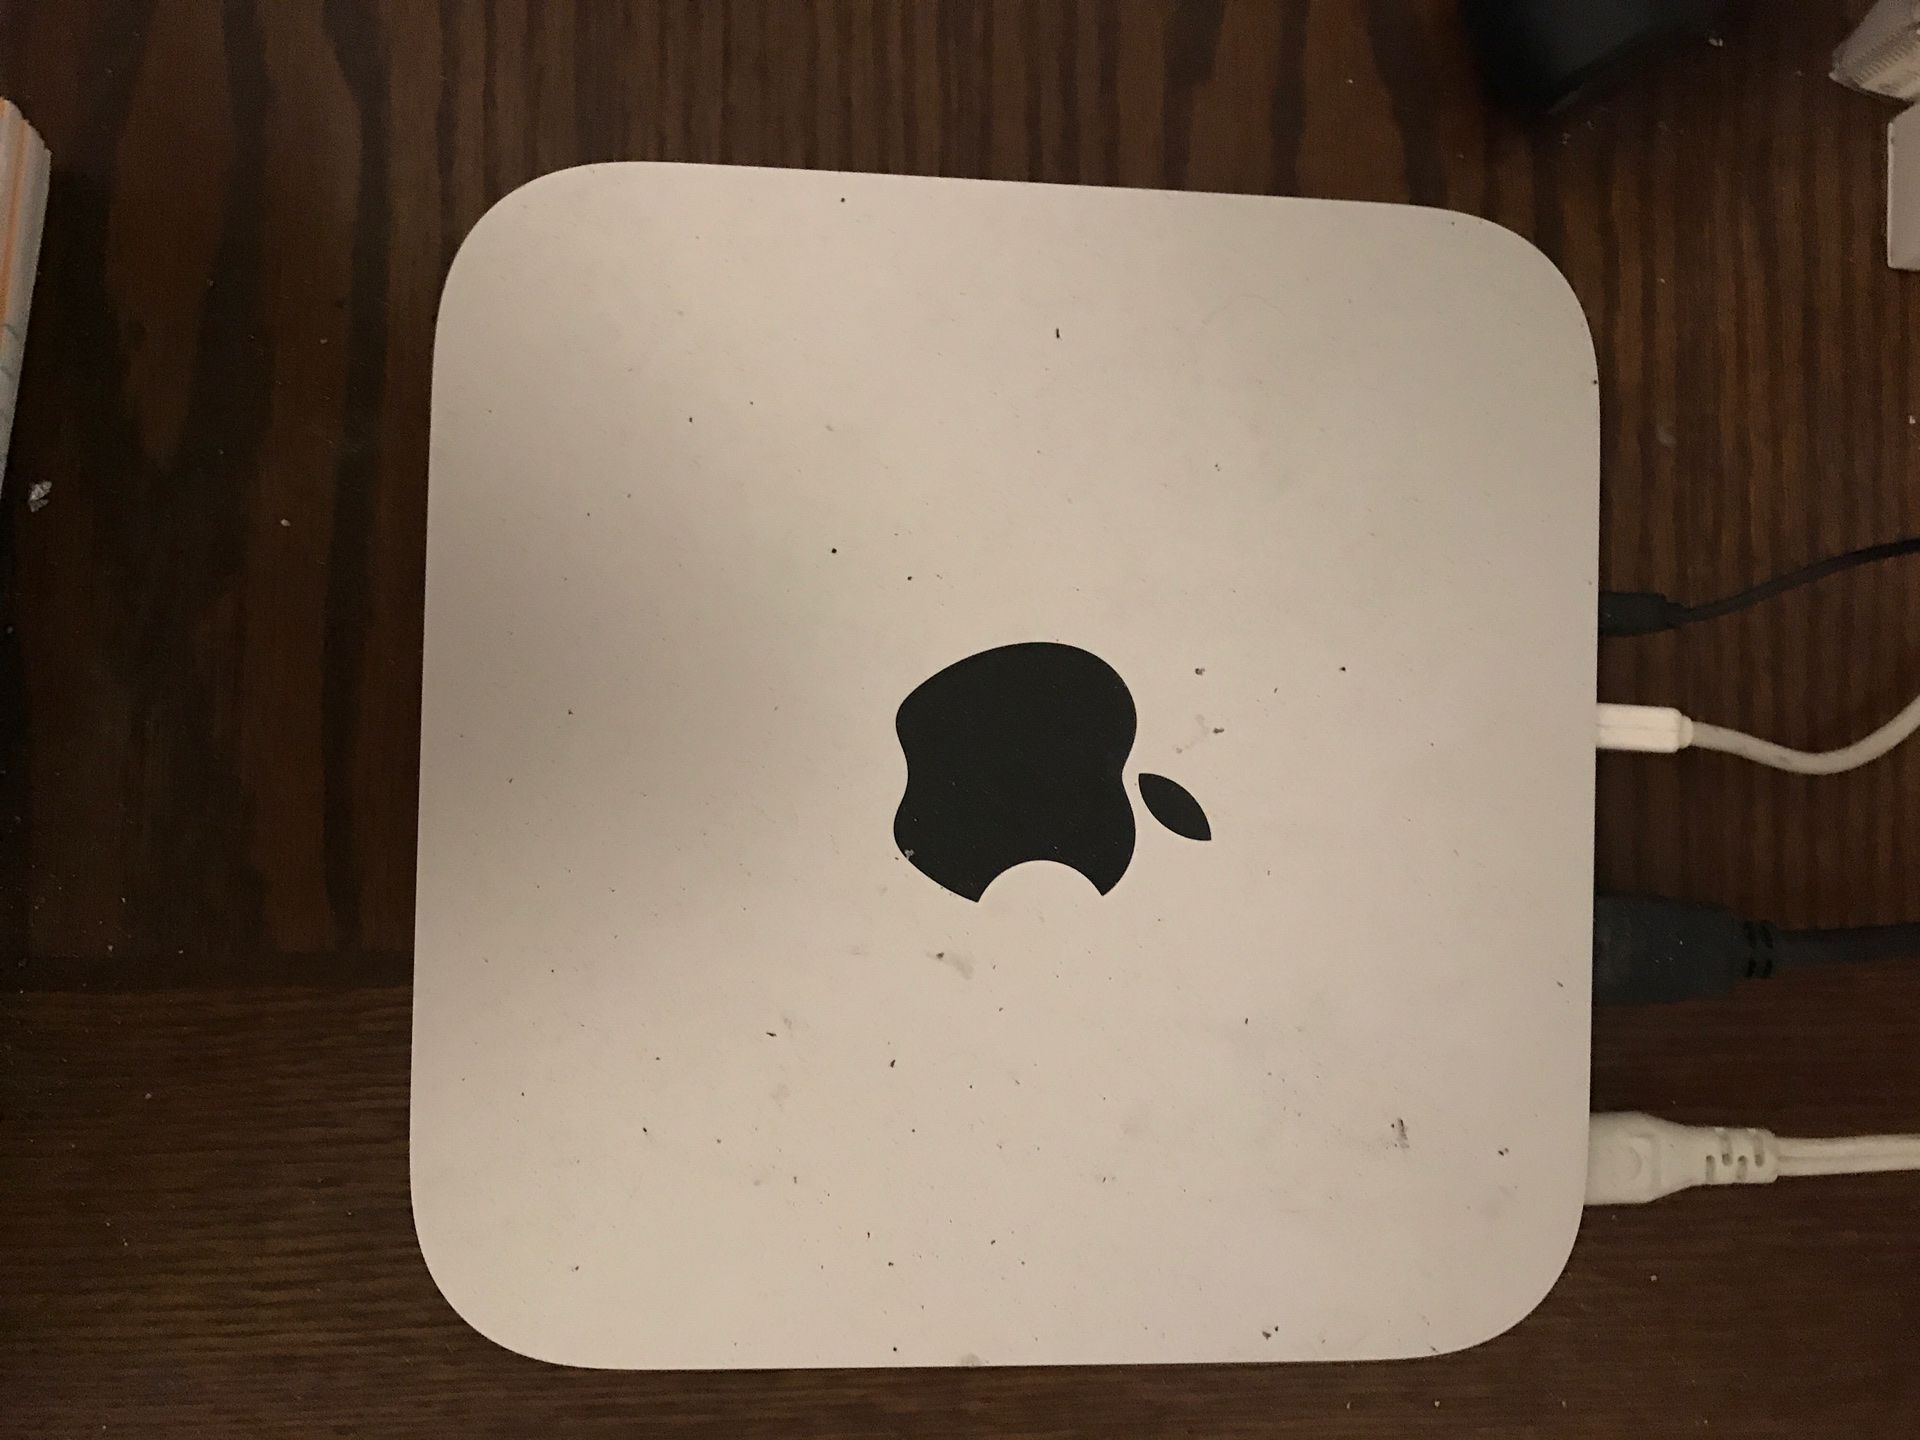 Macintosh mini computer made by apple